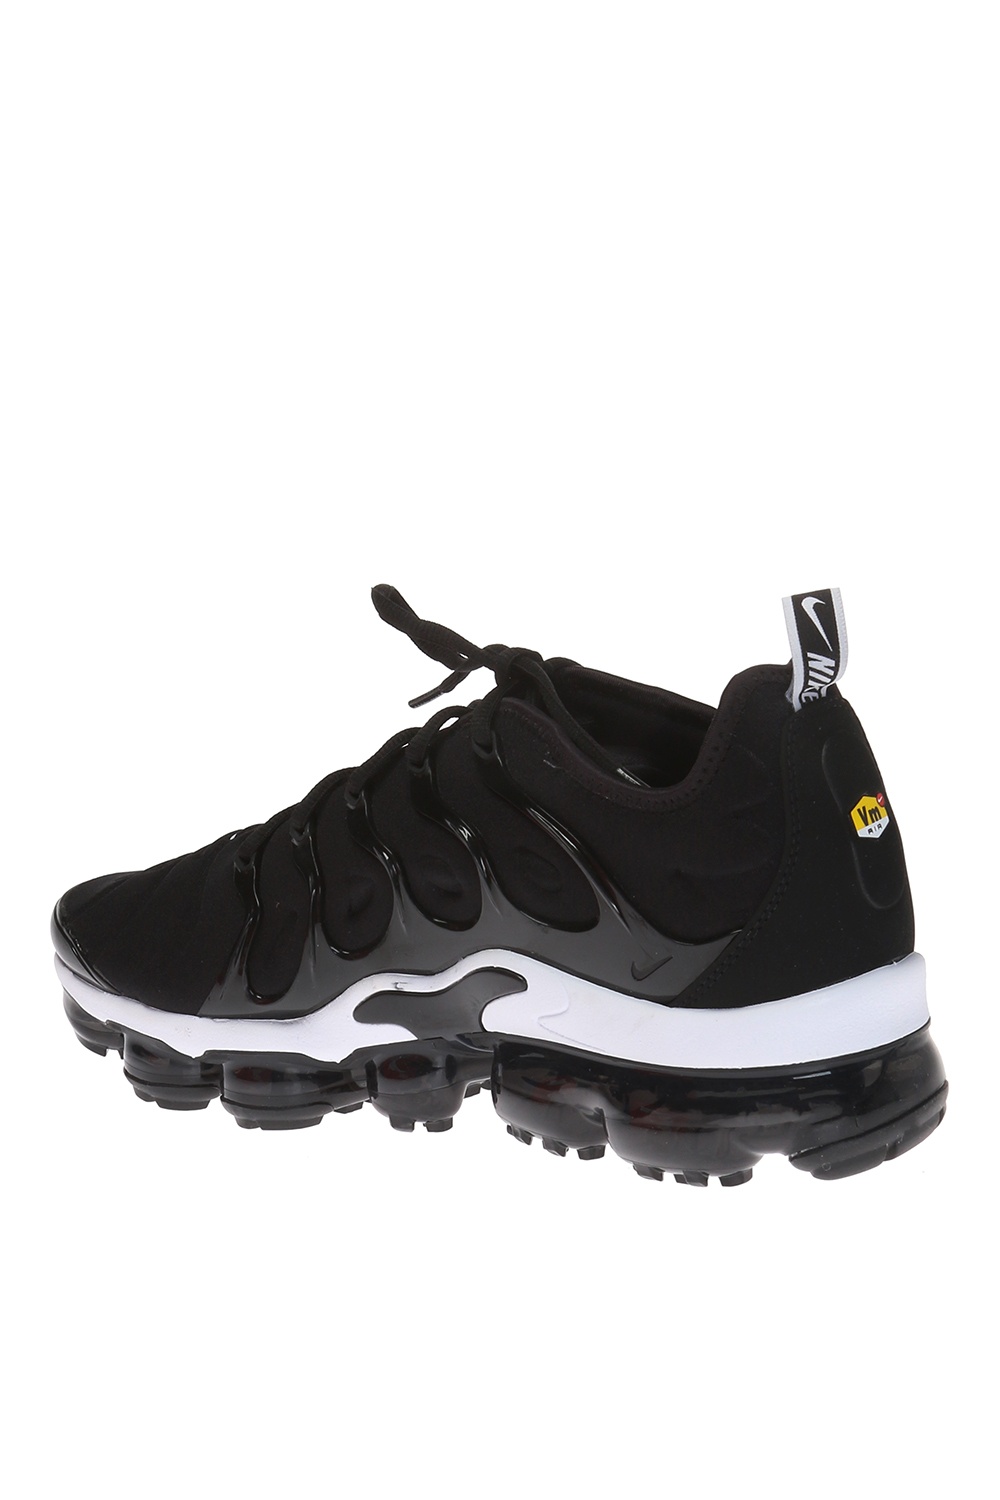 black & white air vapormax plus sneakers